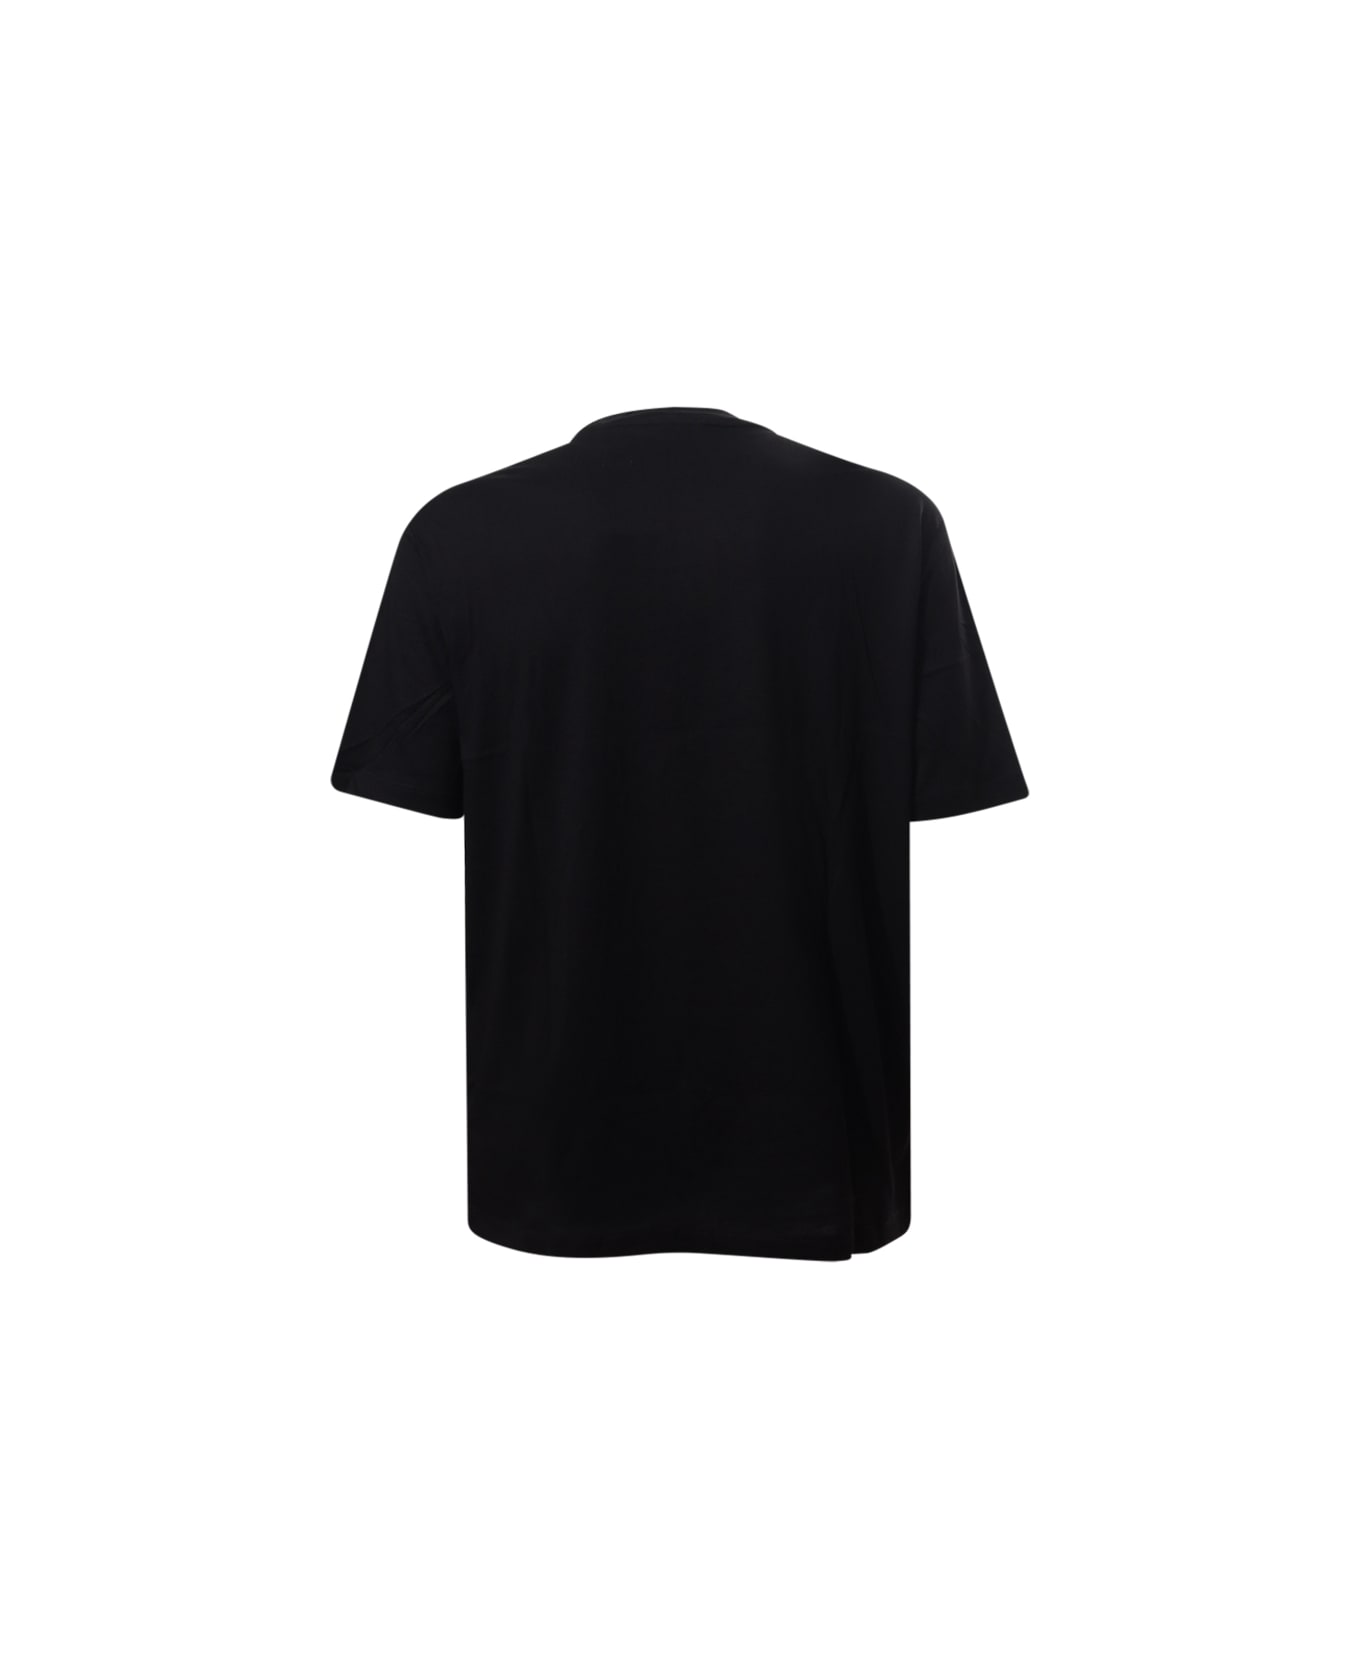 Emporio Armani Cotton T-shirt - Nero